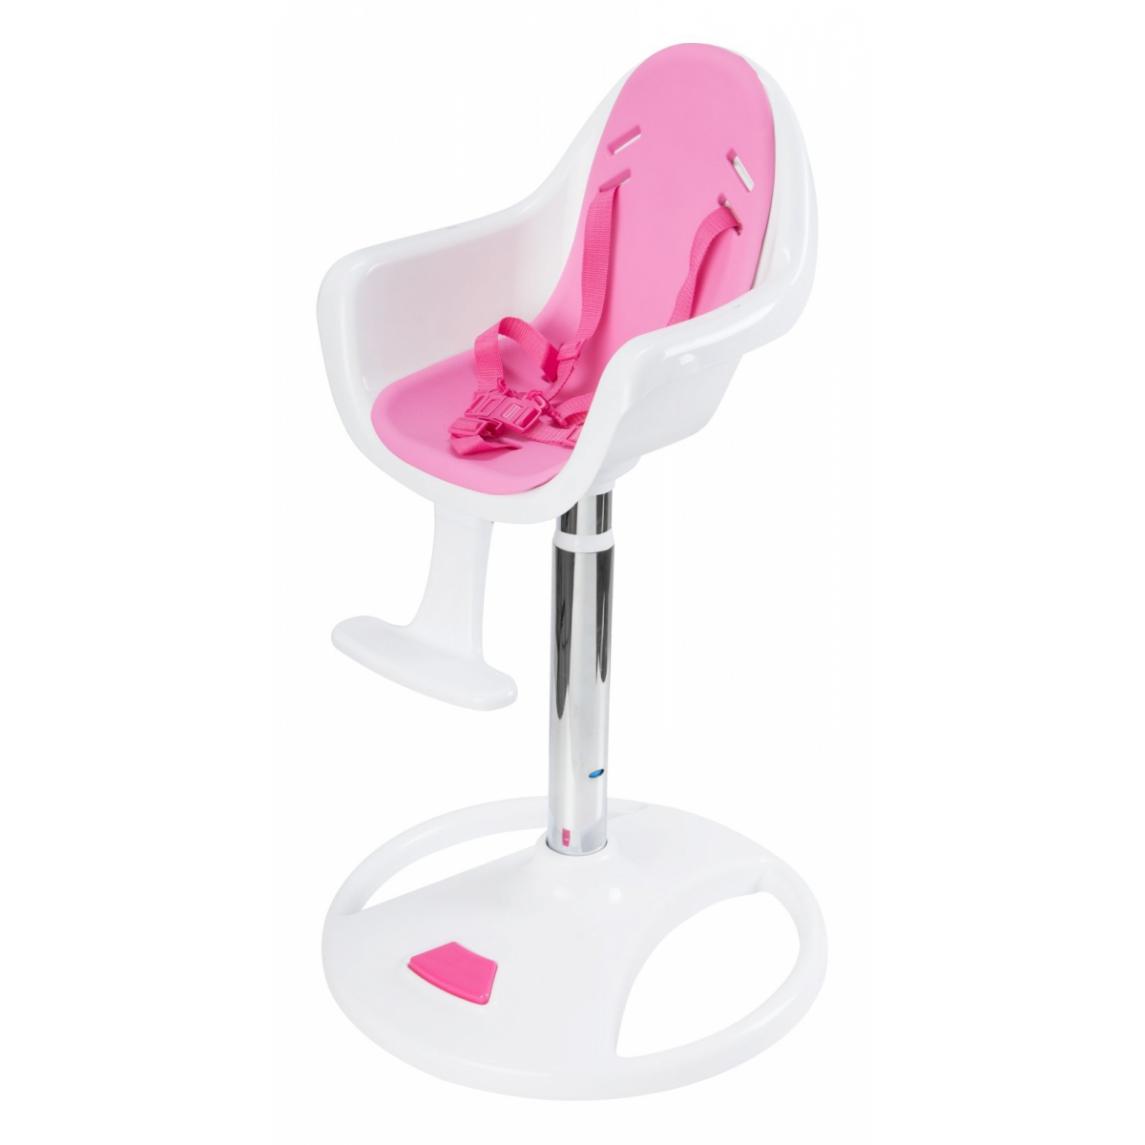 Moby System - Kinderstoel - FLORA - Hoge draaibare kinderstoel - Roze / Wit - Verstelbare hoogte